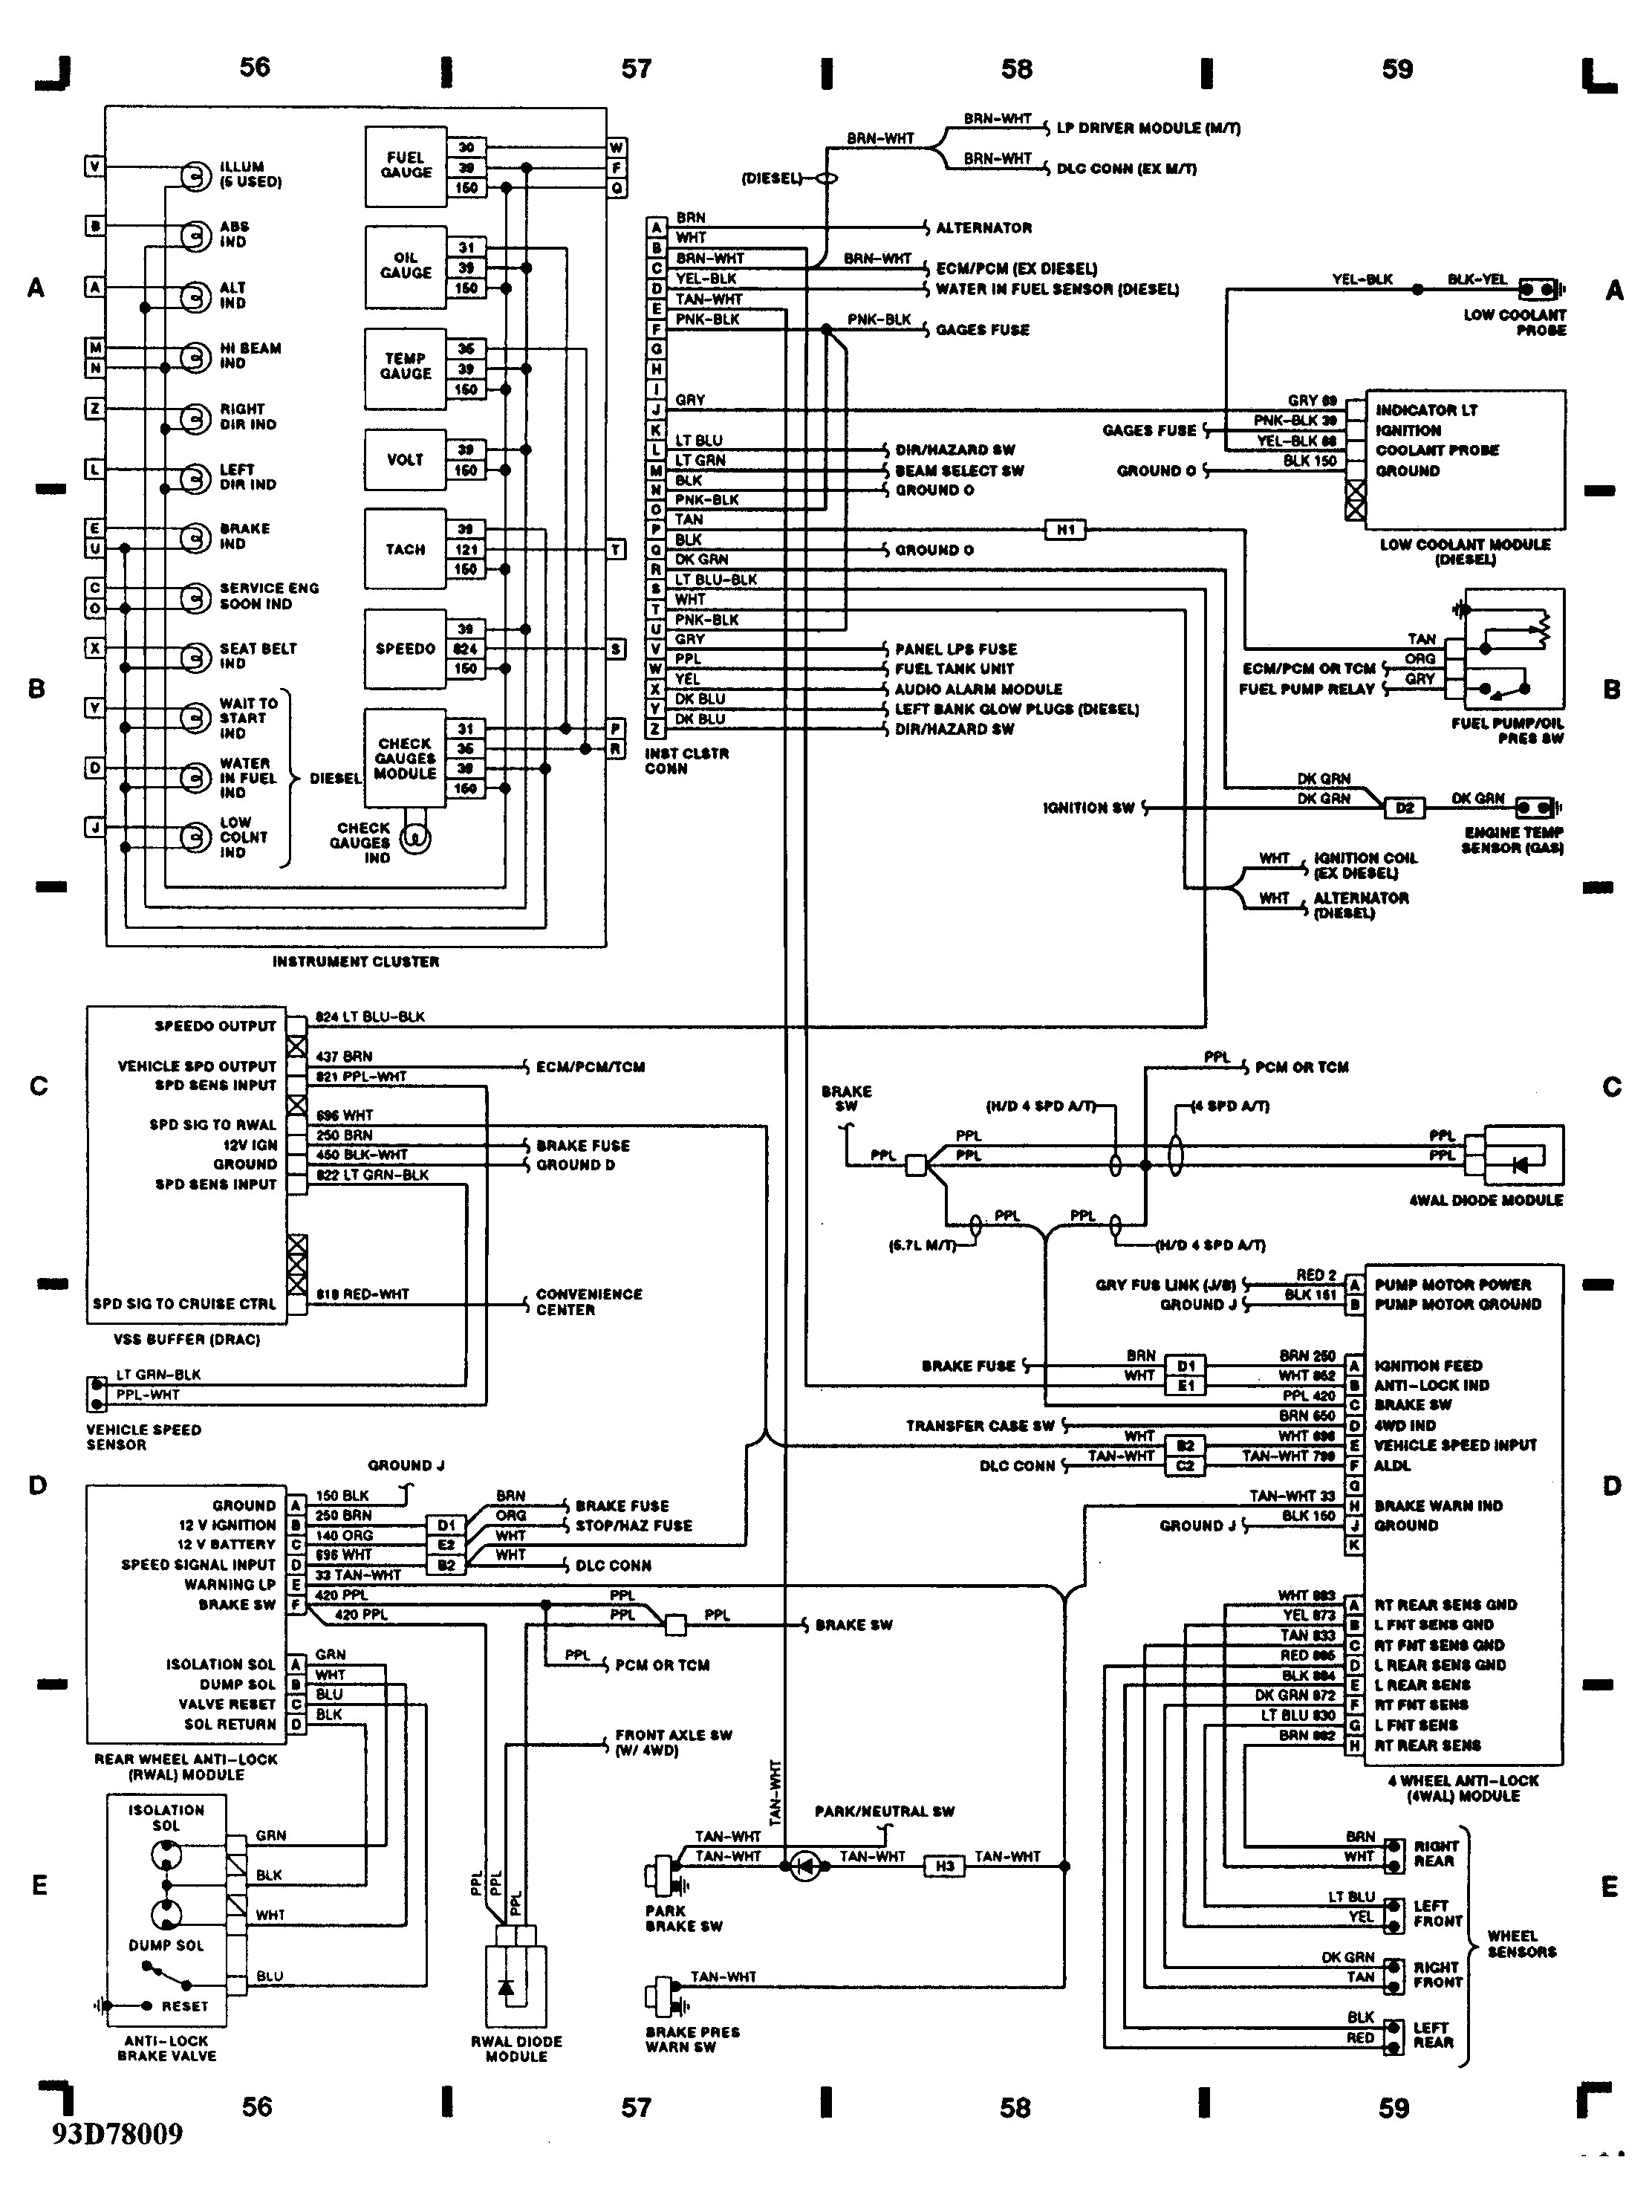 chevy transmission diagrams wiring diagram database chevrolet transmission diagrams